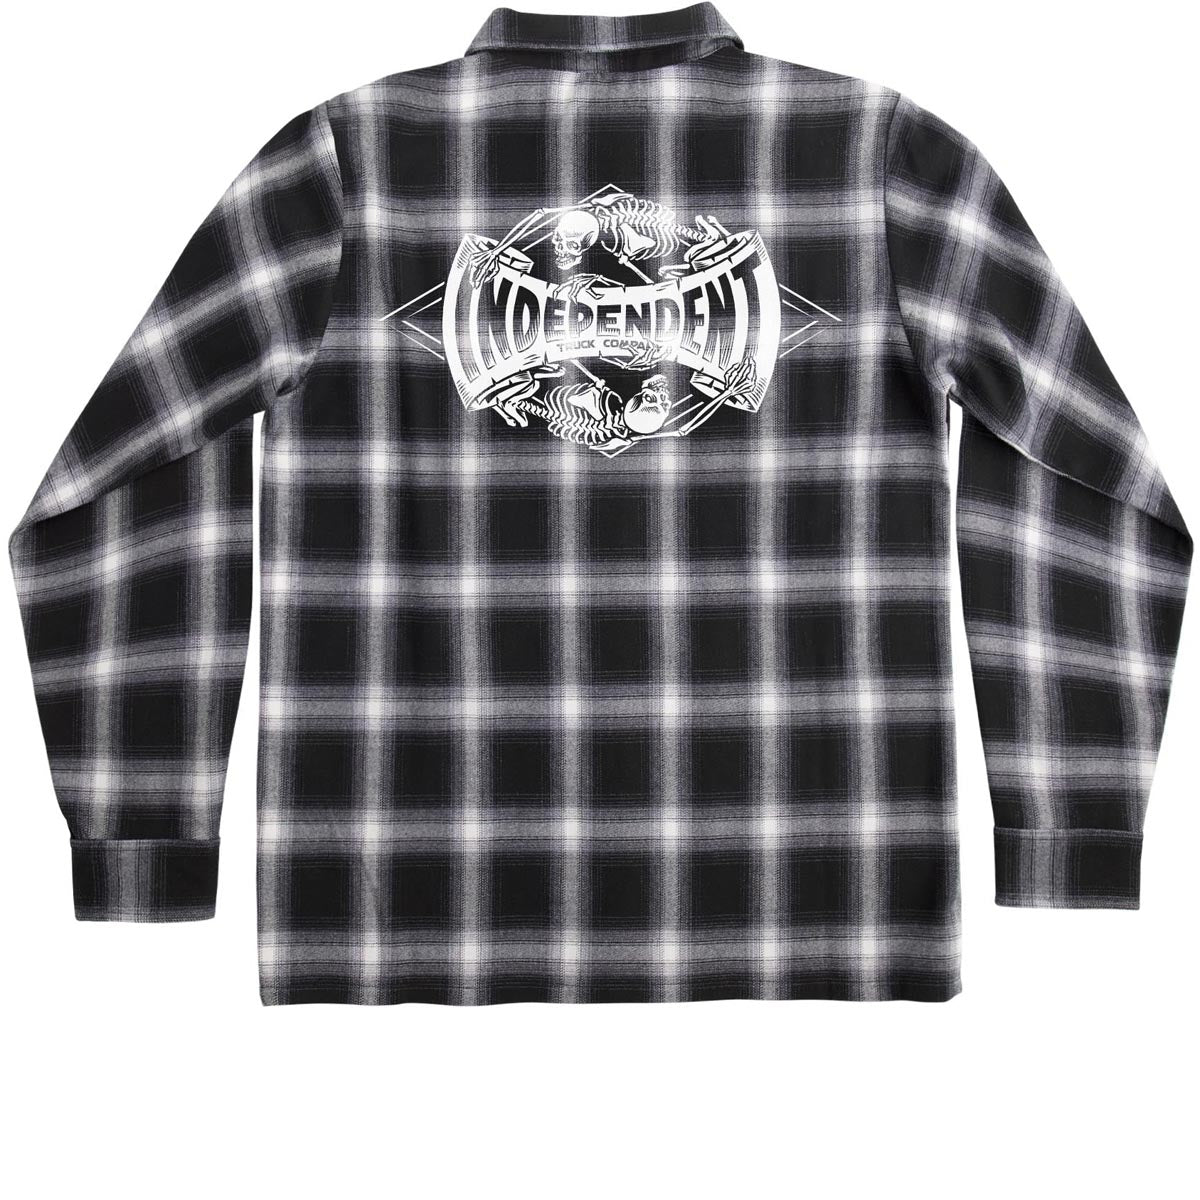 Independent Legacy Flannel Long Sleeve Shirt - Black image 2